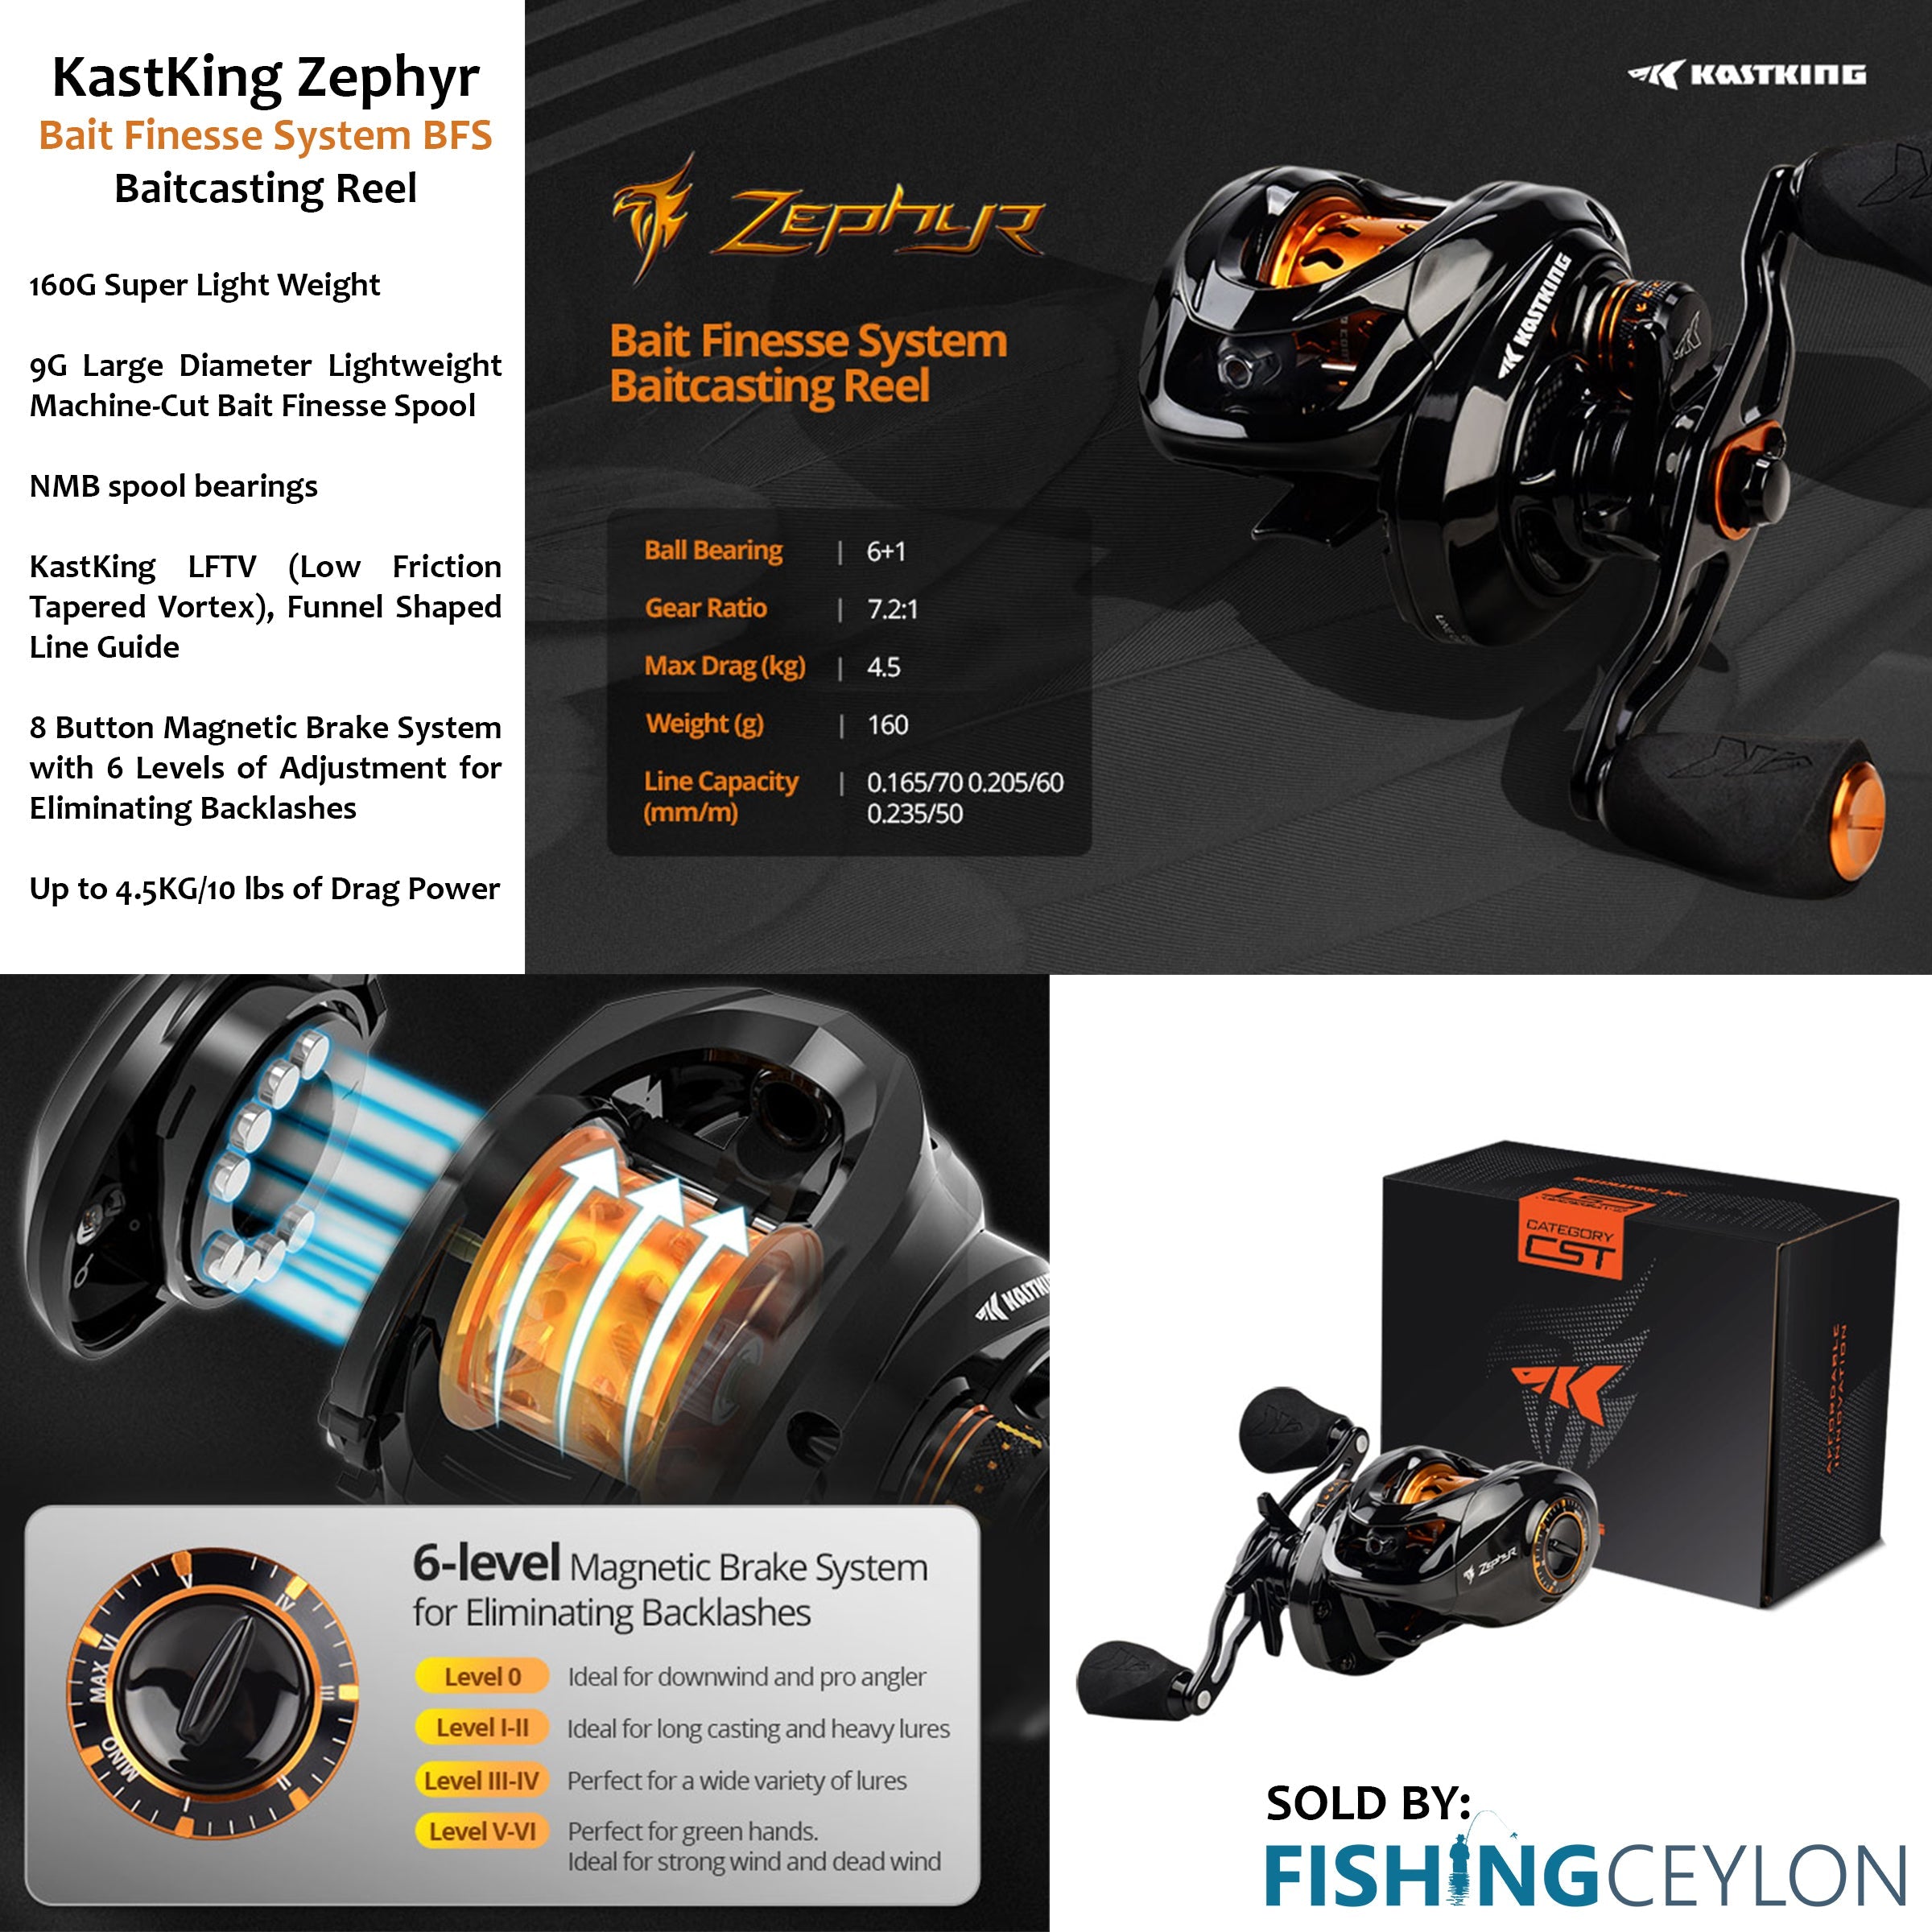 Full Service」- Kastking Zephyr BFS Baitcasting Reel 